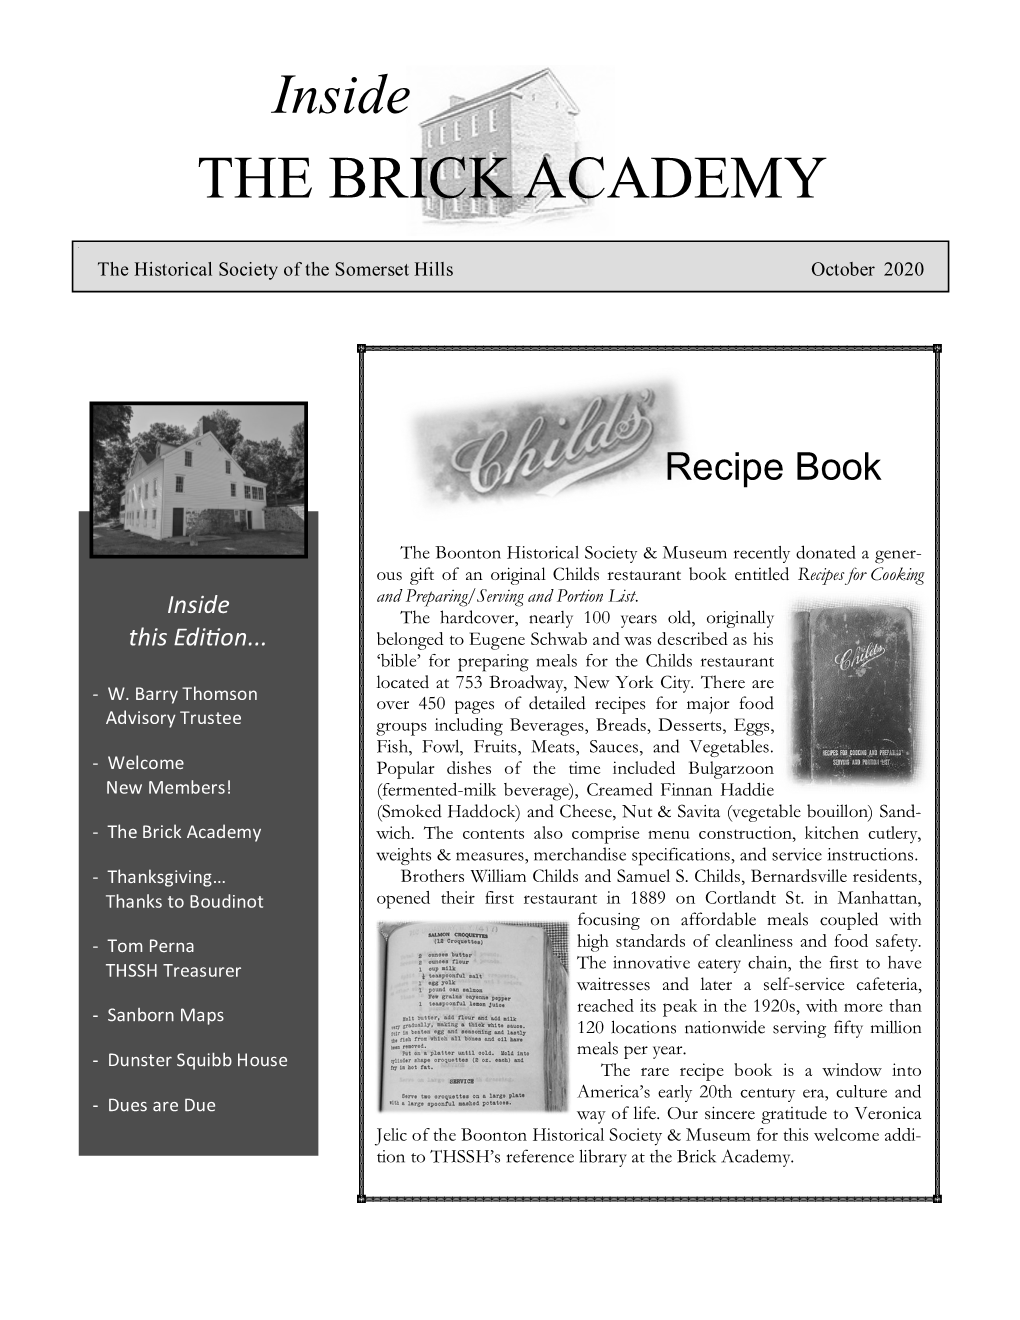 The Brick Academy